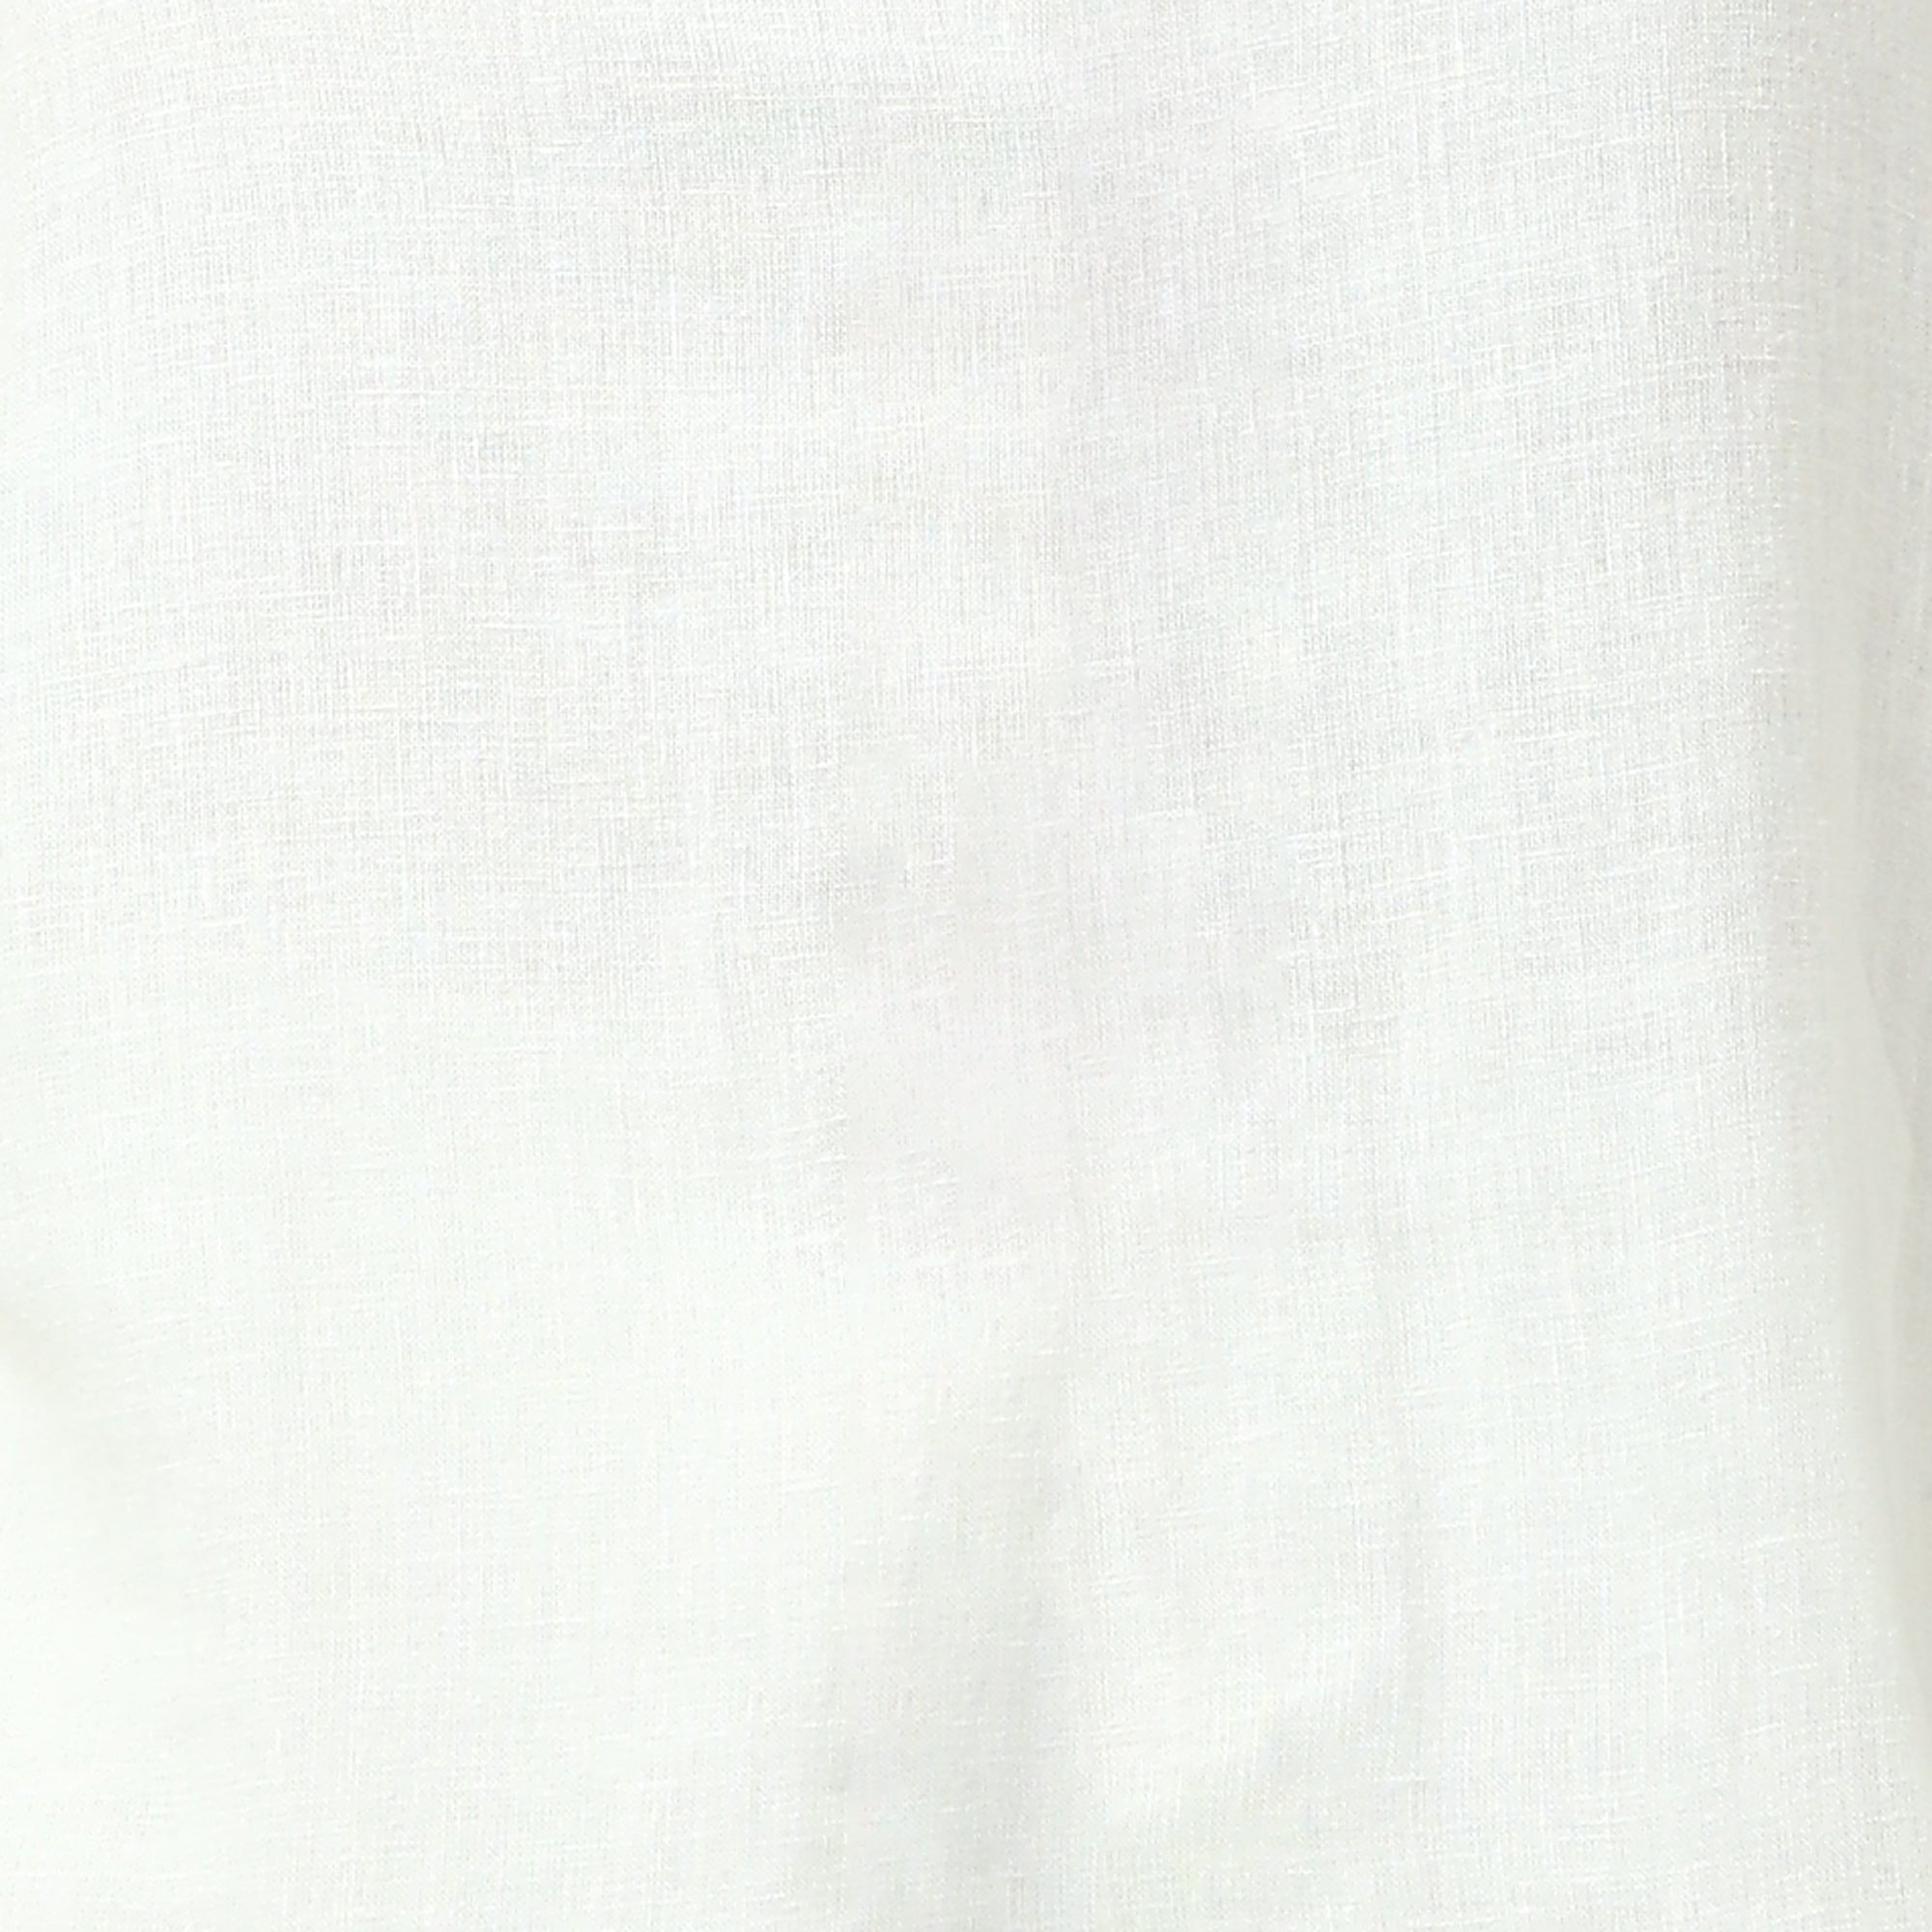 Dakota Co-ord Set - Long Shirt & Pants - Textured White